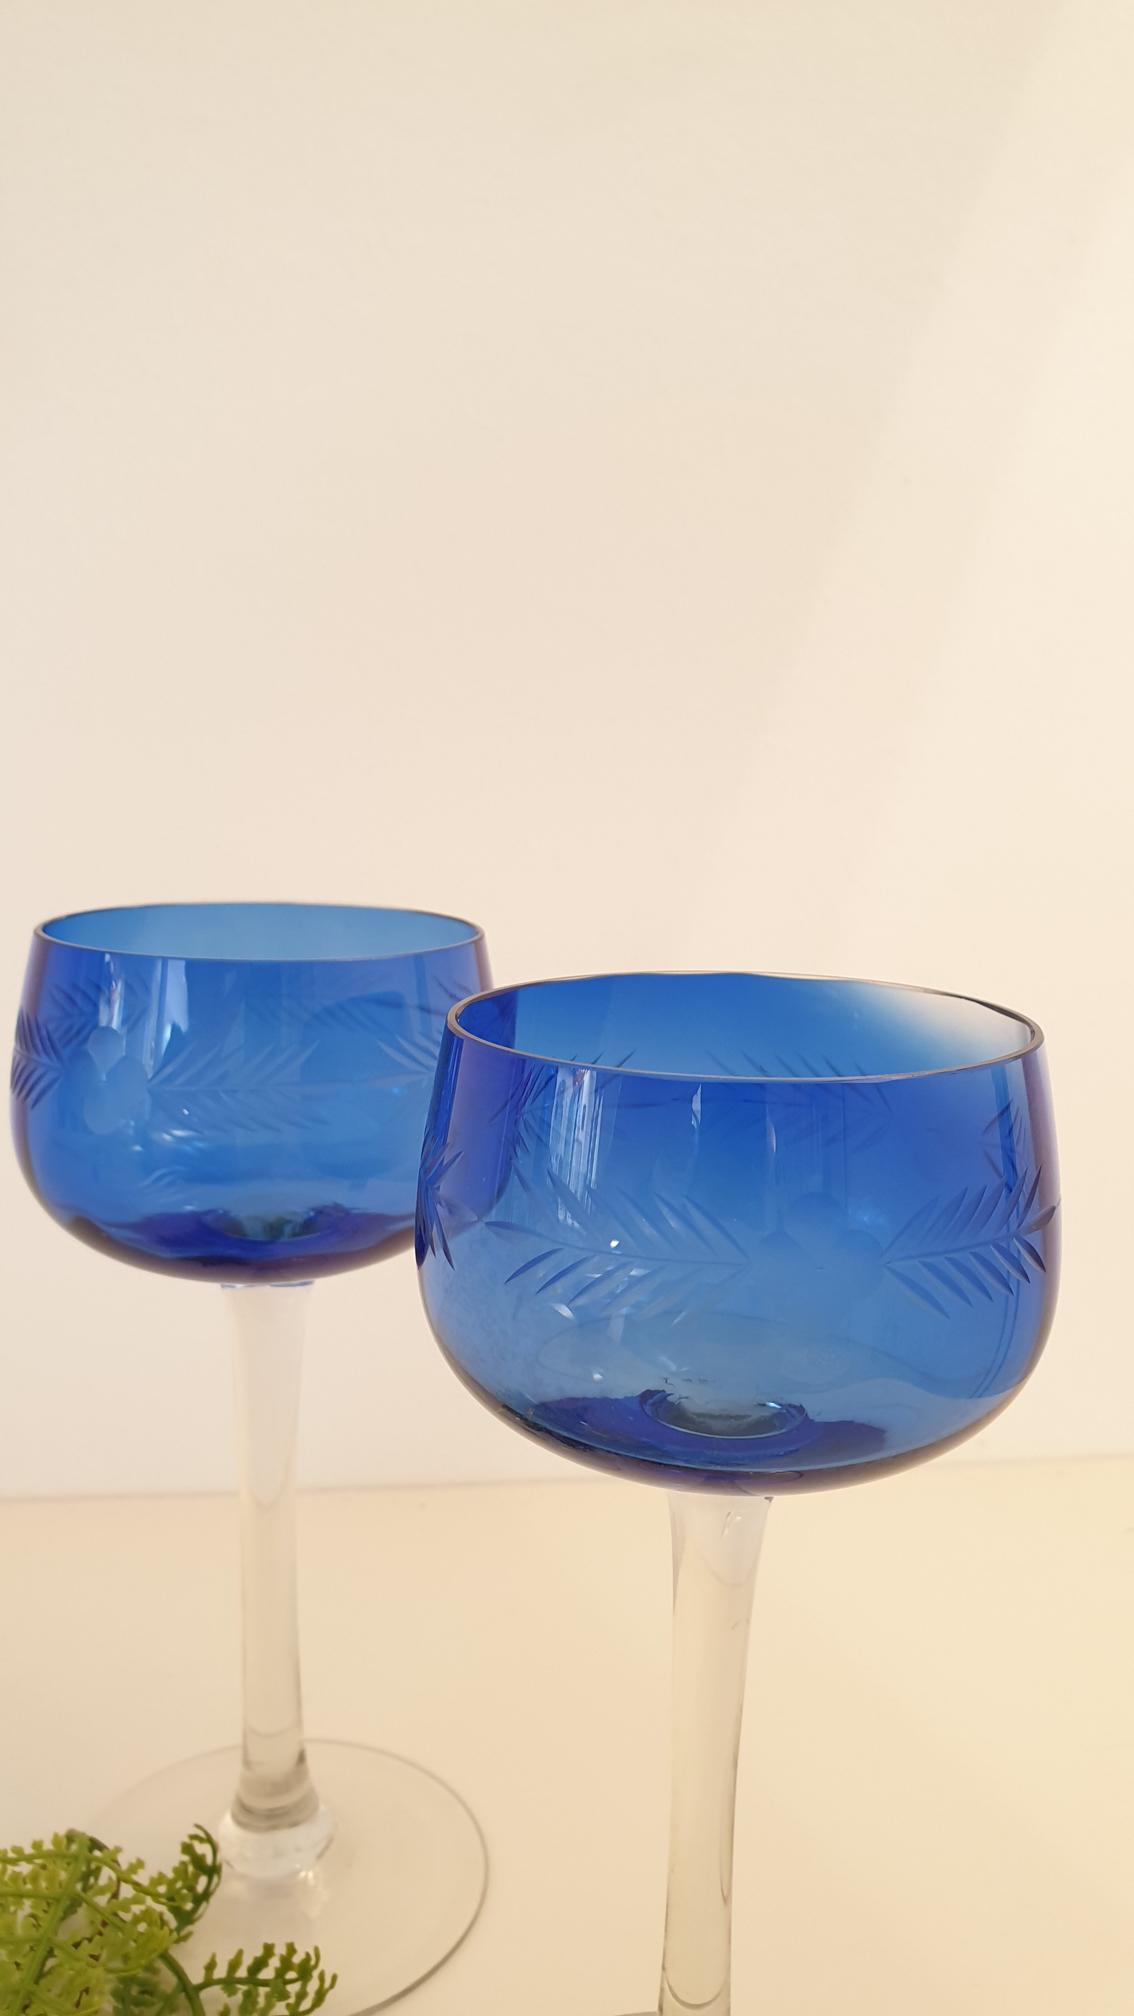  Antike Kristall Gläser im Set - blau